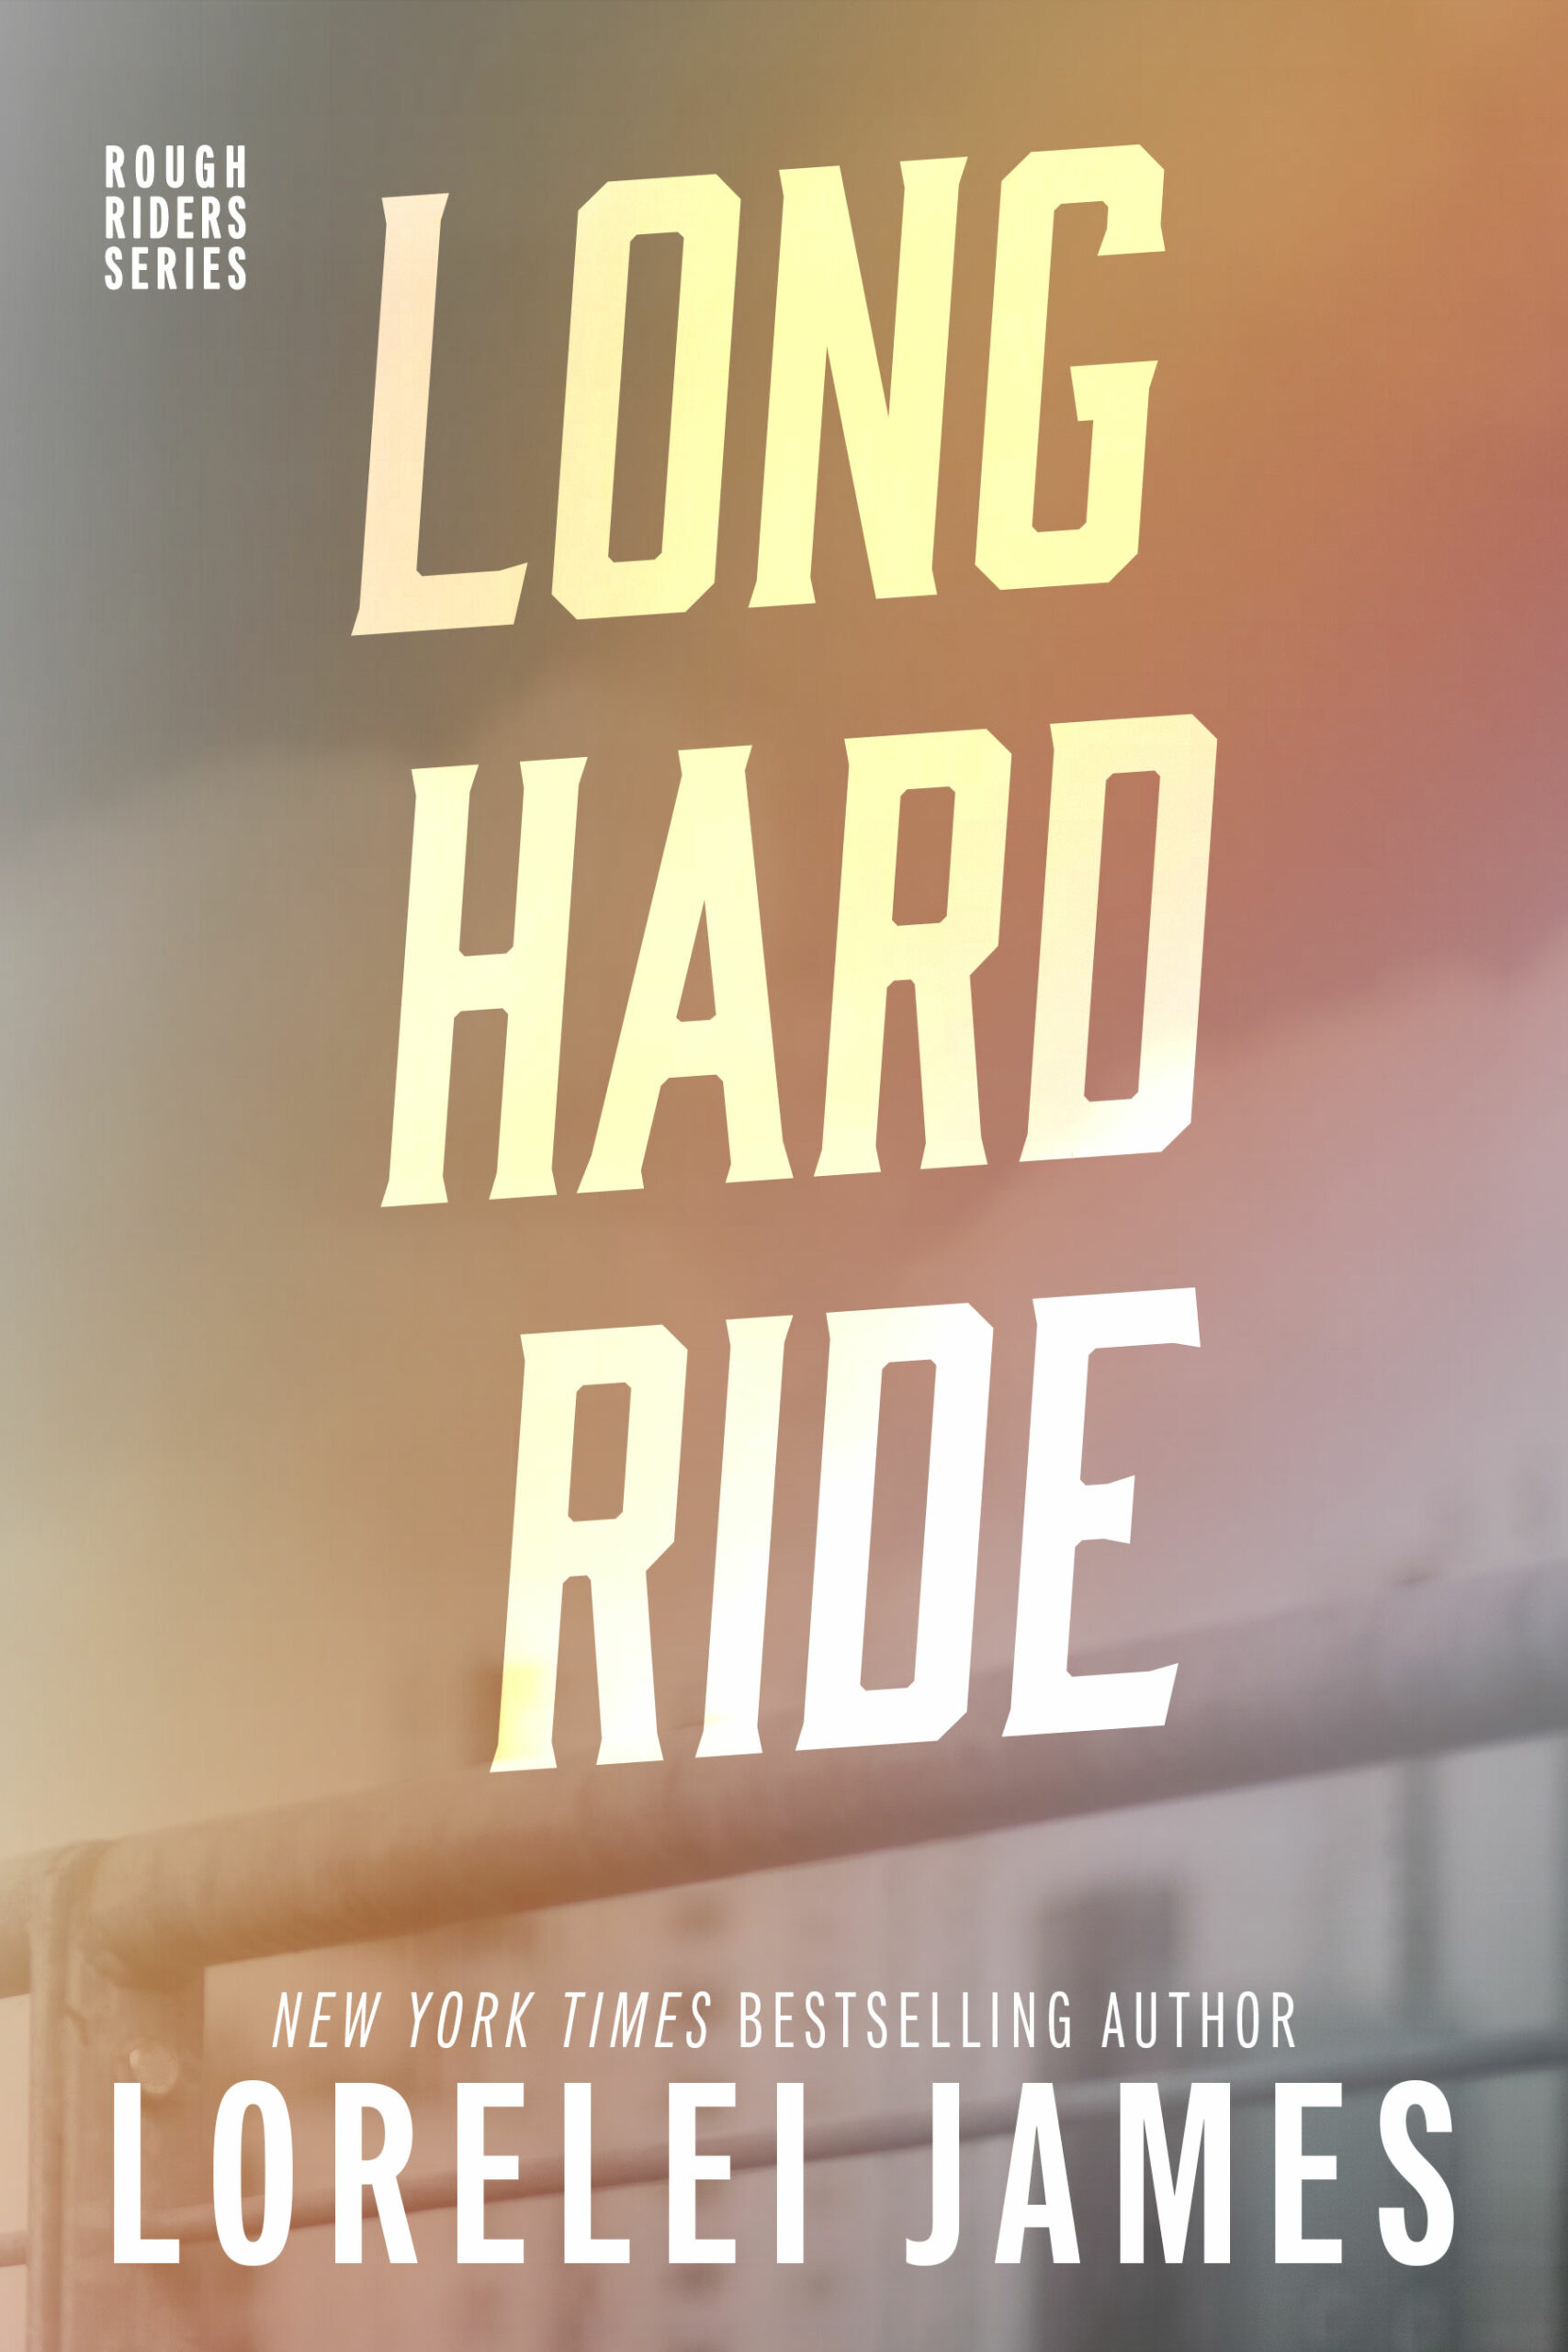 Long Hard Ride